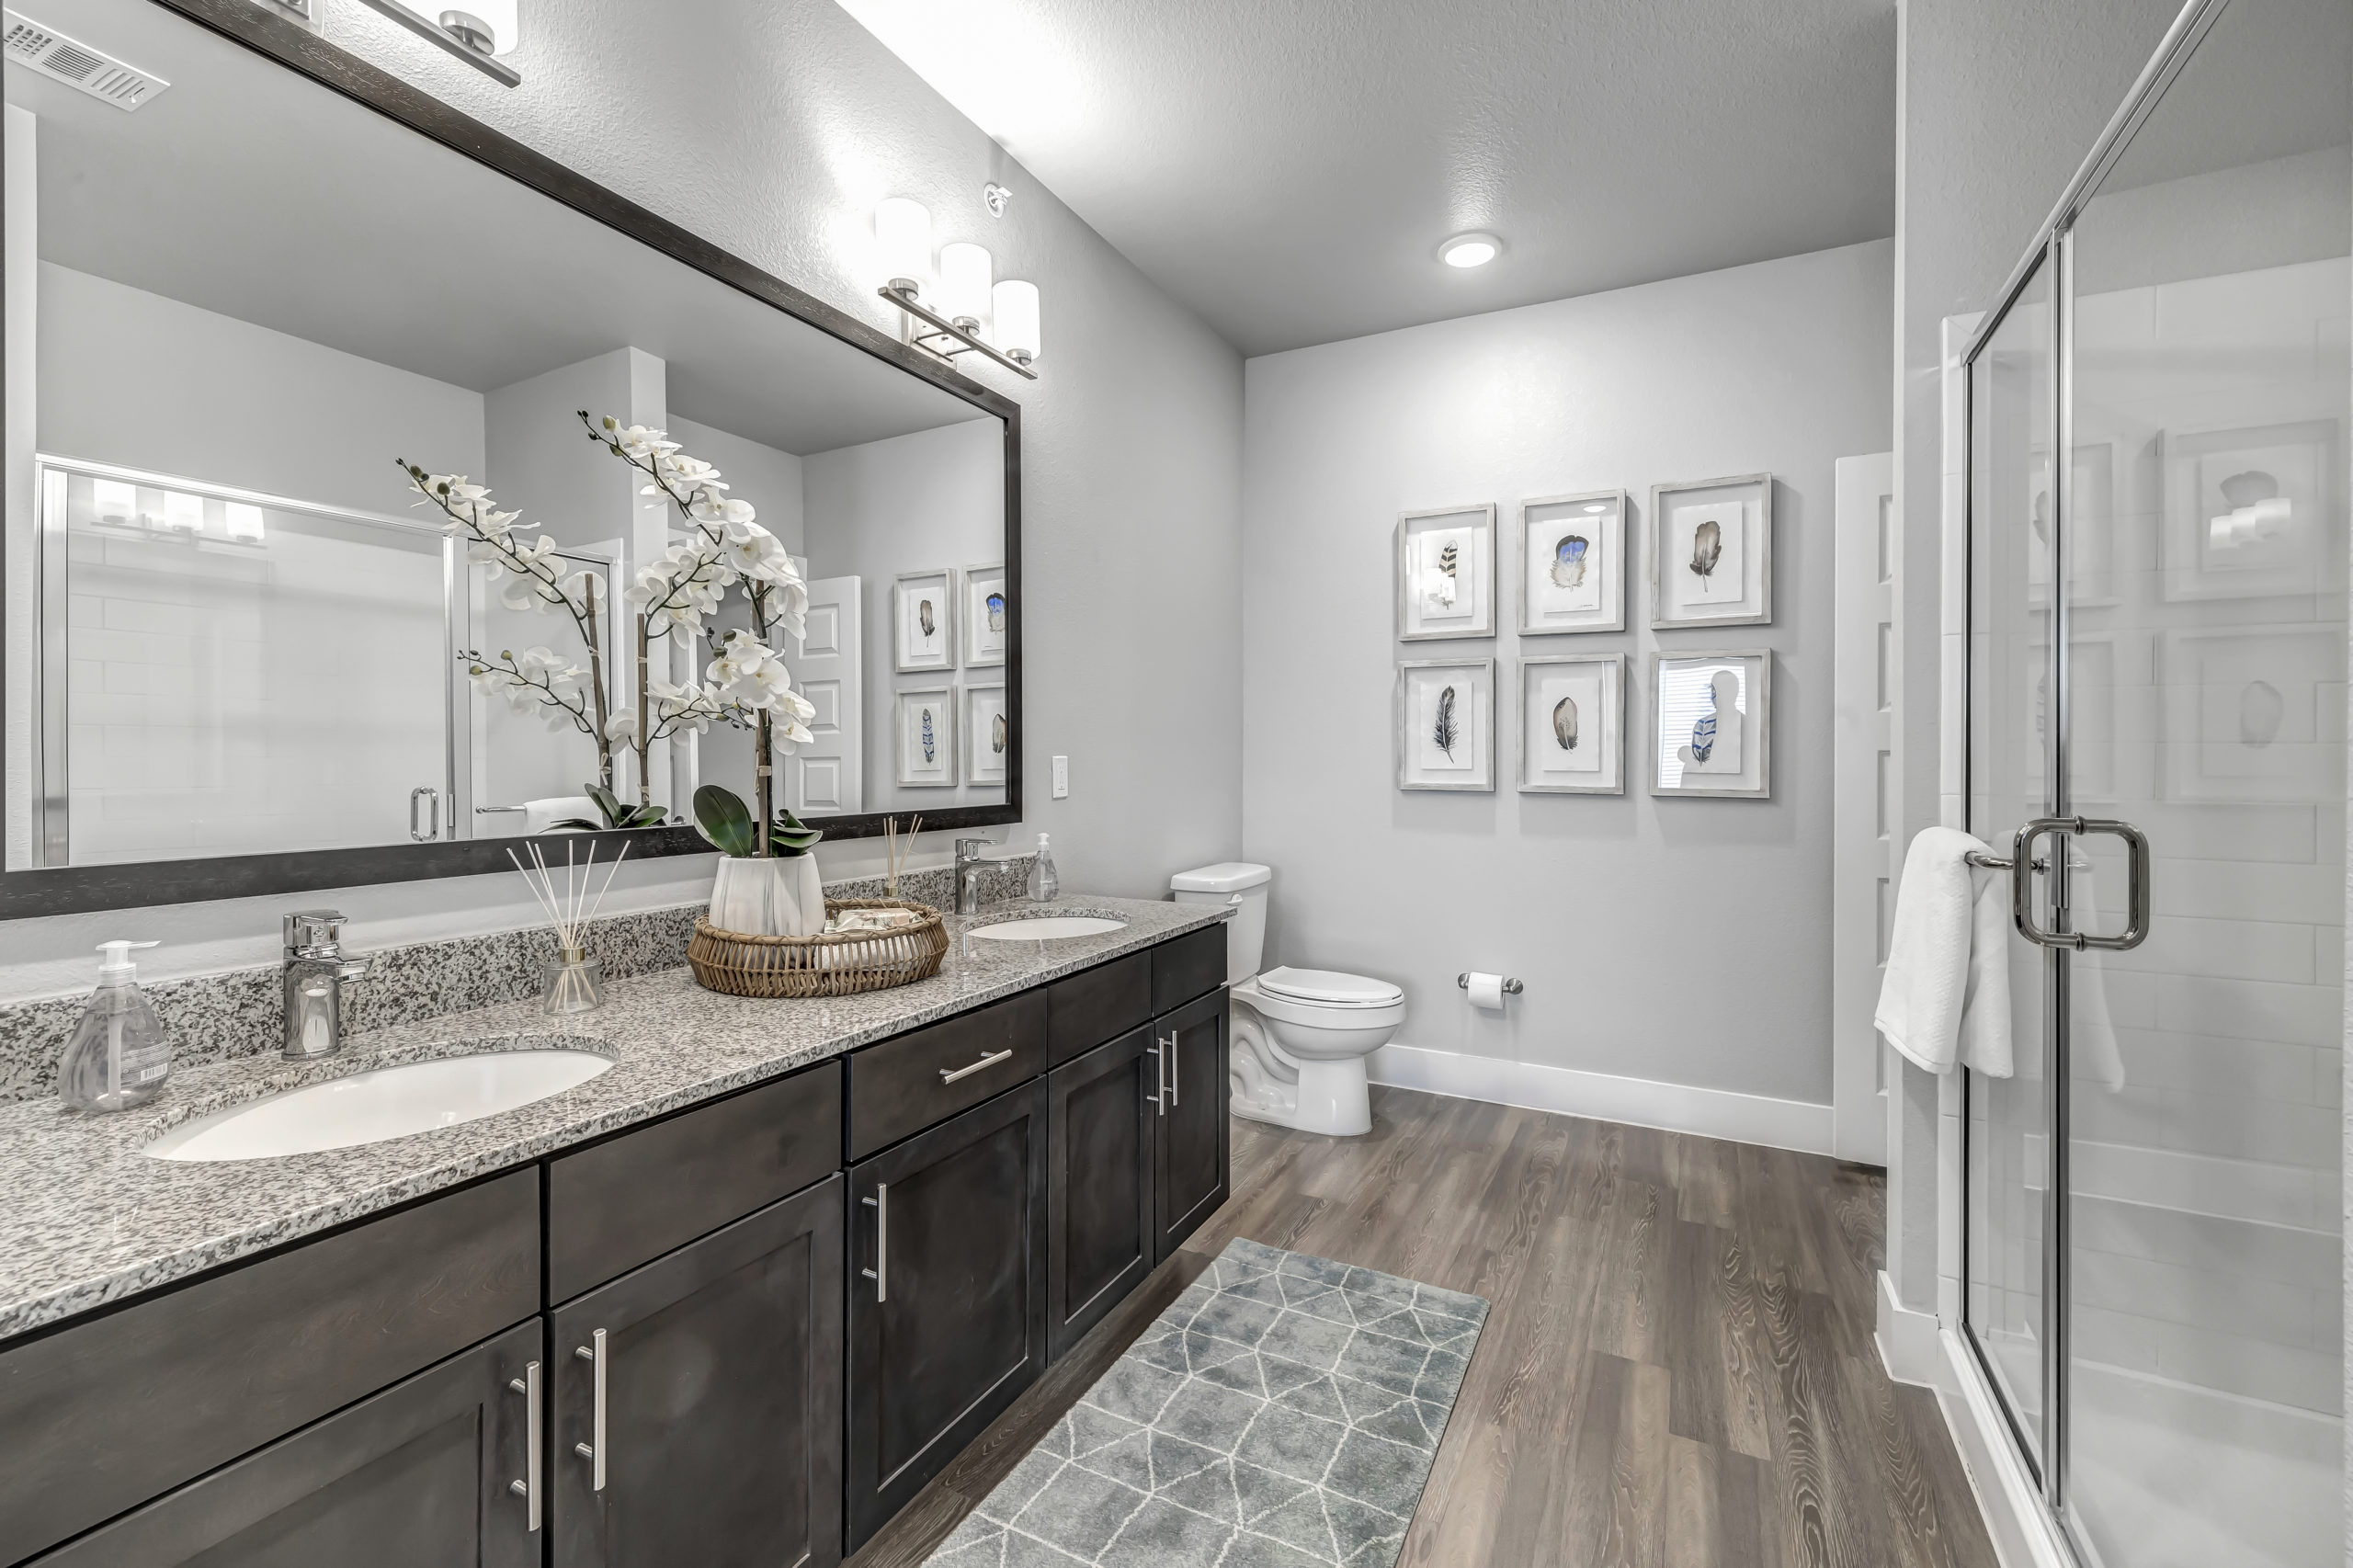 Oversized Dual Bathroom Vanities At Solea Keller Apartments In Fort Worth Texas Scaled &nocache=1